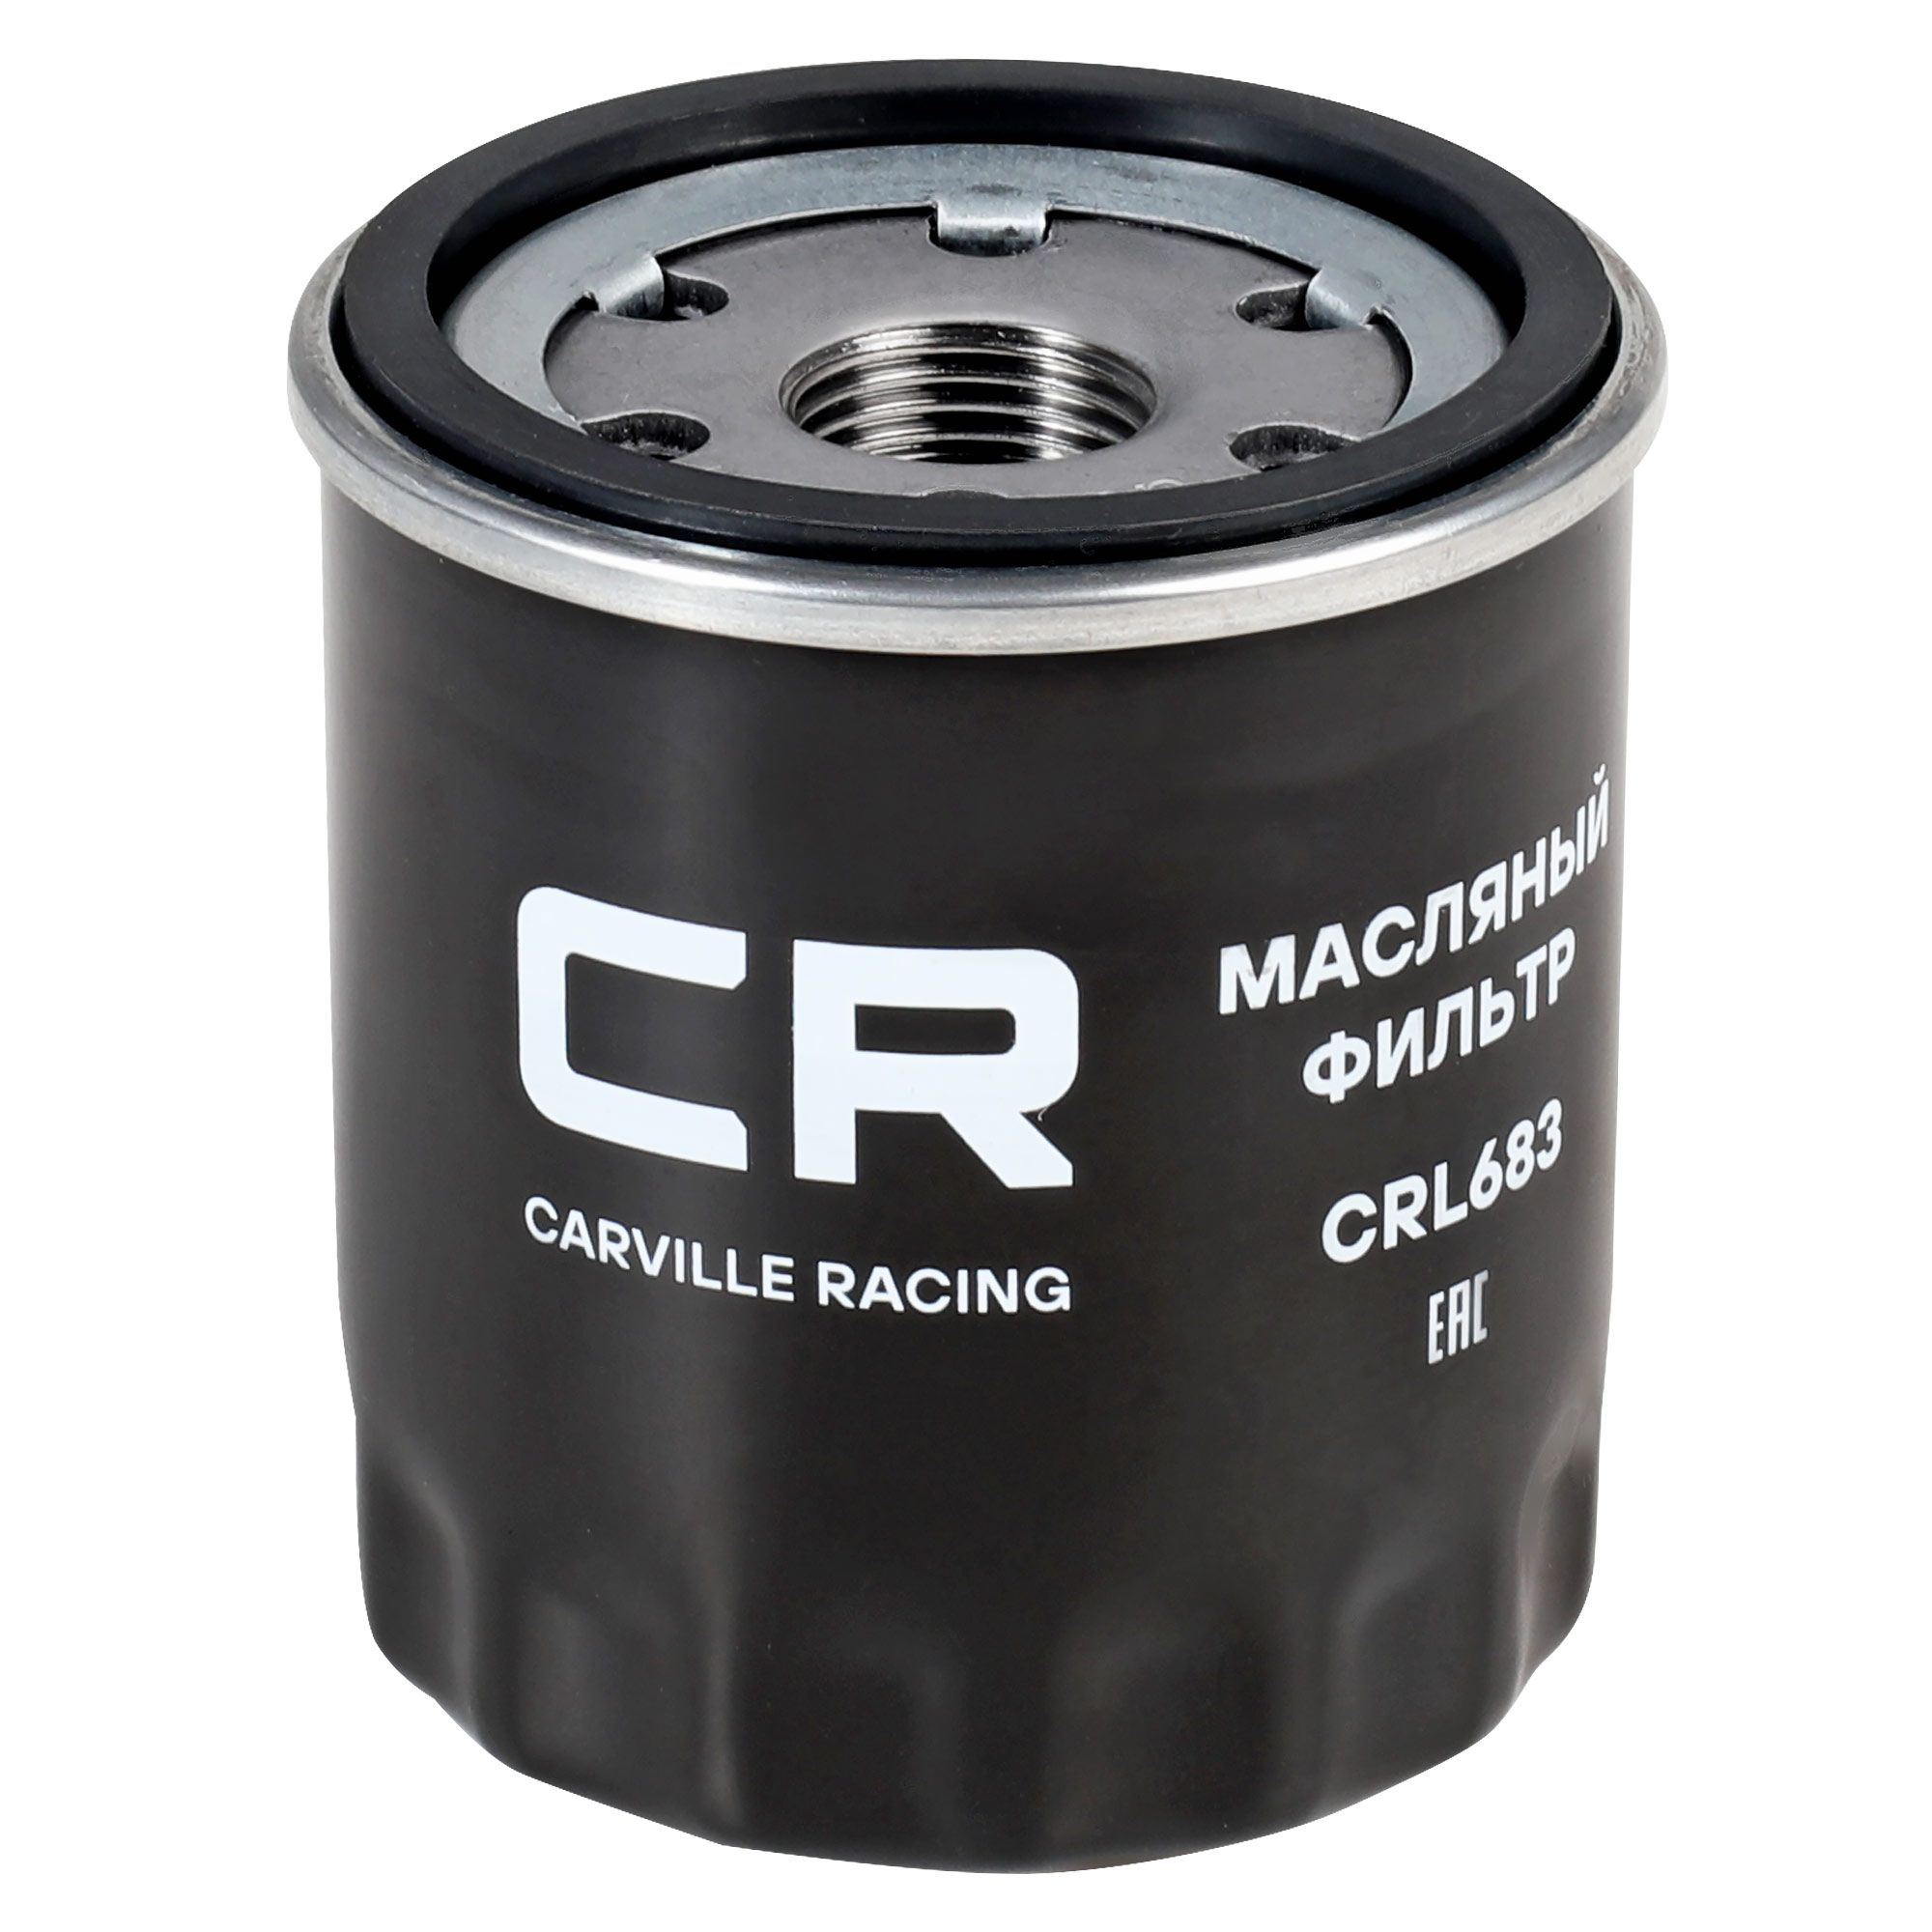 CARVILLE RACING CRL683 Фильтр для а/м toyota corolla (00 )/(06 ) 1.4/1.6i/geely emgrand (12 )/lifan x60 (12 ) (масл.) (crl6